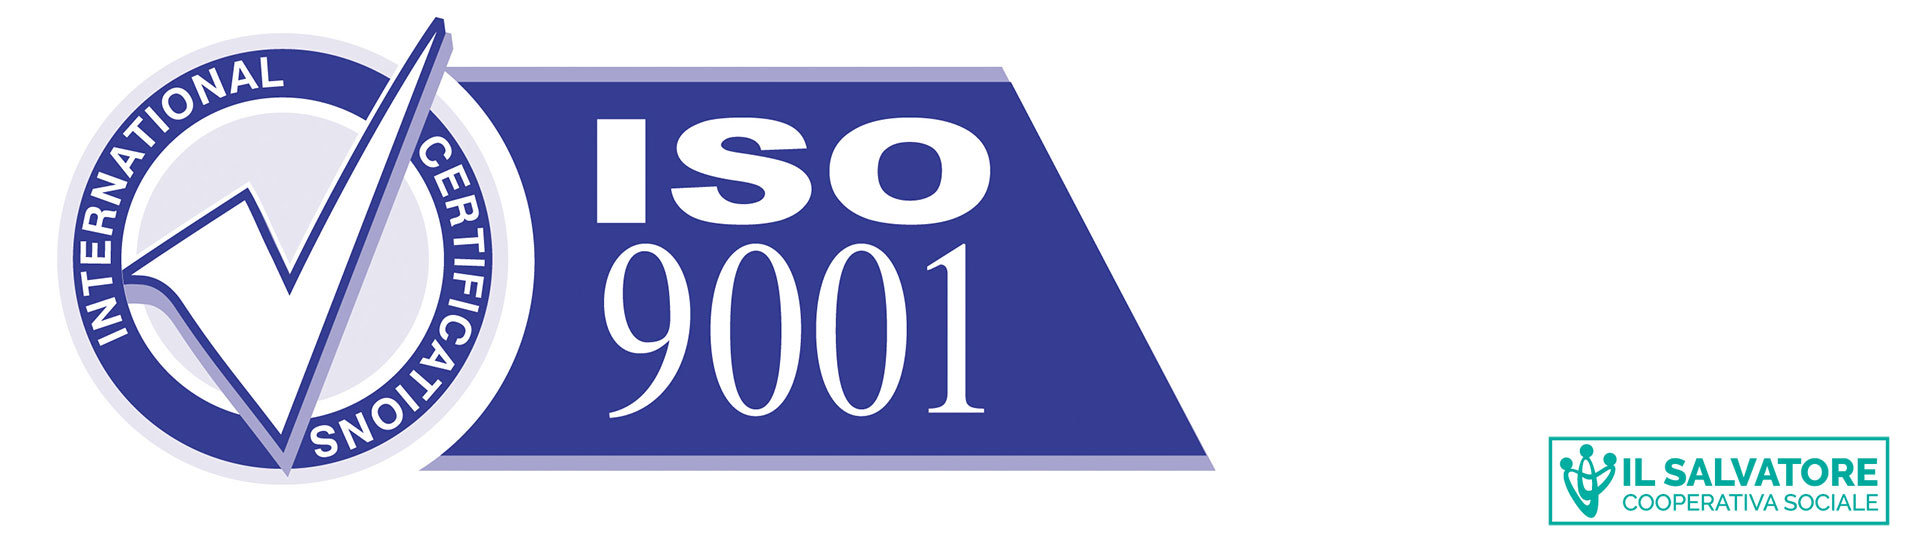 banneriso9001